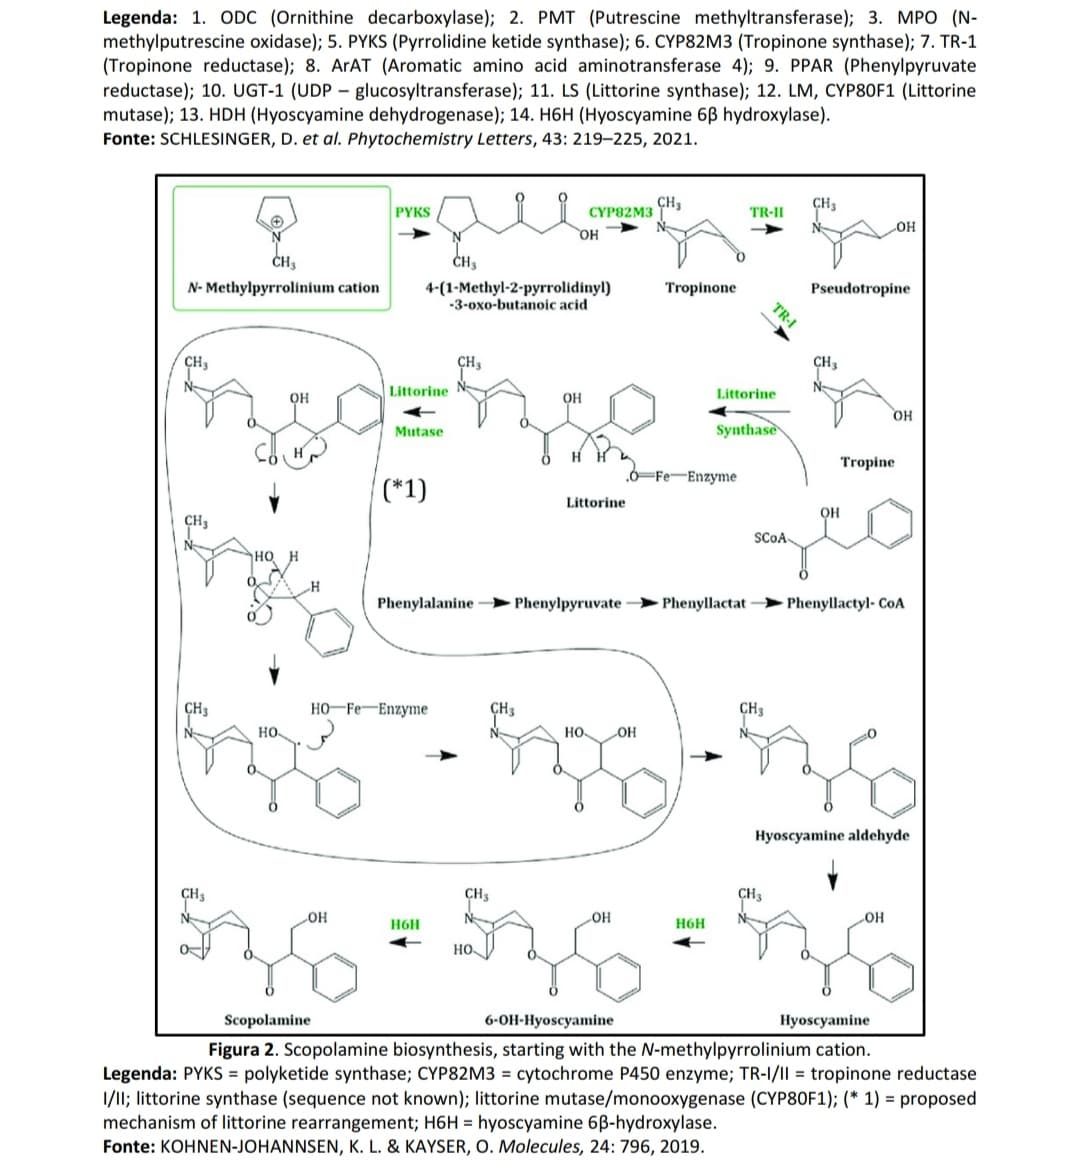 МРО (N-
Legenda: 1. ODC (Ornithine decarboxylase); 2. PMT (Putrescine methyltransferase);
methylputrescine oxidase); 5. PYKS (Pyrrolidine ketide synthase); 6. CYP82M3 (Tropinone synthase); 7. TR-1
(Tropinone reductase); 8. ArAT (Aromatic amino acid aminotransferase 4); 9. PPAR (Phenylpyruvate
reductase); 10. UGT-1 (UDP – glucosyltransferase); 11. LS (Littorine synthase); 12. LM, CYP80F1 (Littorine
mutase); 13. HDH (Hyoscyamine dehydrogenase); 14. H6H (Hyoscyamine 6B hydroxylase).
Fonte: SCHLESINGER, D. et al. Phytochemistry Letters, 43: 219–225, 2021.
CH3
CYP82M3
CH3
PYKS
TR-II
N
OH
HO
N- Methylpyrrolinium cation
4-(1-Methyl-2-pyrrolidinyl)
-3-oxo-butanoic acid
Tropinone
Pseudotropine
TR-I
CH3
ÇH3
CH3
Littorine
Littorine
он
OH
OH
Mutase
Synthase
Tropine
.6-Fe-Enzyme
(*1)
Littorine
OH
CH3
SCOA
но
Phenylalanine
Phenylpyruvate > Phenyllactat
Phenyllactyl- CoA
CH3
но -Fe —Enzyme
CH3
HO
но
COH
Hyoscyamine aldehyde
CH3
CH3
CH3
он
OH
H6H
H6H
HO
Scopolamine
6-OH-Hyoscyamine
Hyoscyamine
Figura 2. Scopolamine biosynthesis, starting with the N-methylpyrrolinium cation.
Legenda: PYKS = polyketide synthase; CYP82M3 = cytochrome P450 enzyme; TR-I/II = tropinone reductase
1/1I; littorine synthase (sequence not known); littorine mutase/monooxygenase (CYP80F1); (* 1) = proposed
mechanism of littorine rearrangement; H6H = hyoscyamine 6B-hydroxylase.
Fonte: KOHNEN-JOHANNSEN, K. L. & KAYSER, O. Molecules, 24: 796, 2019.
